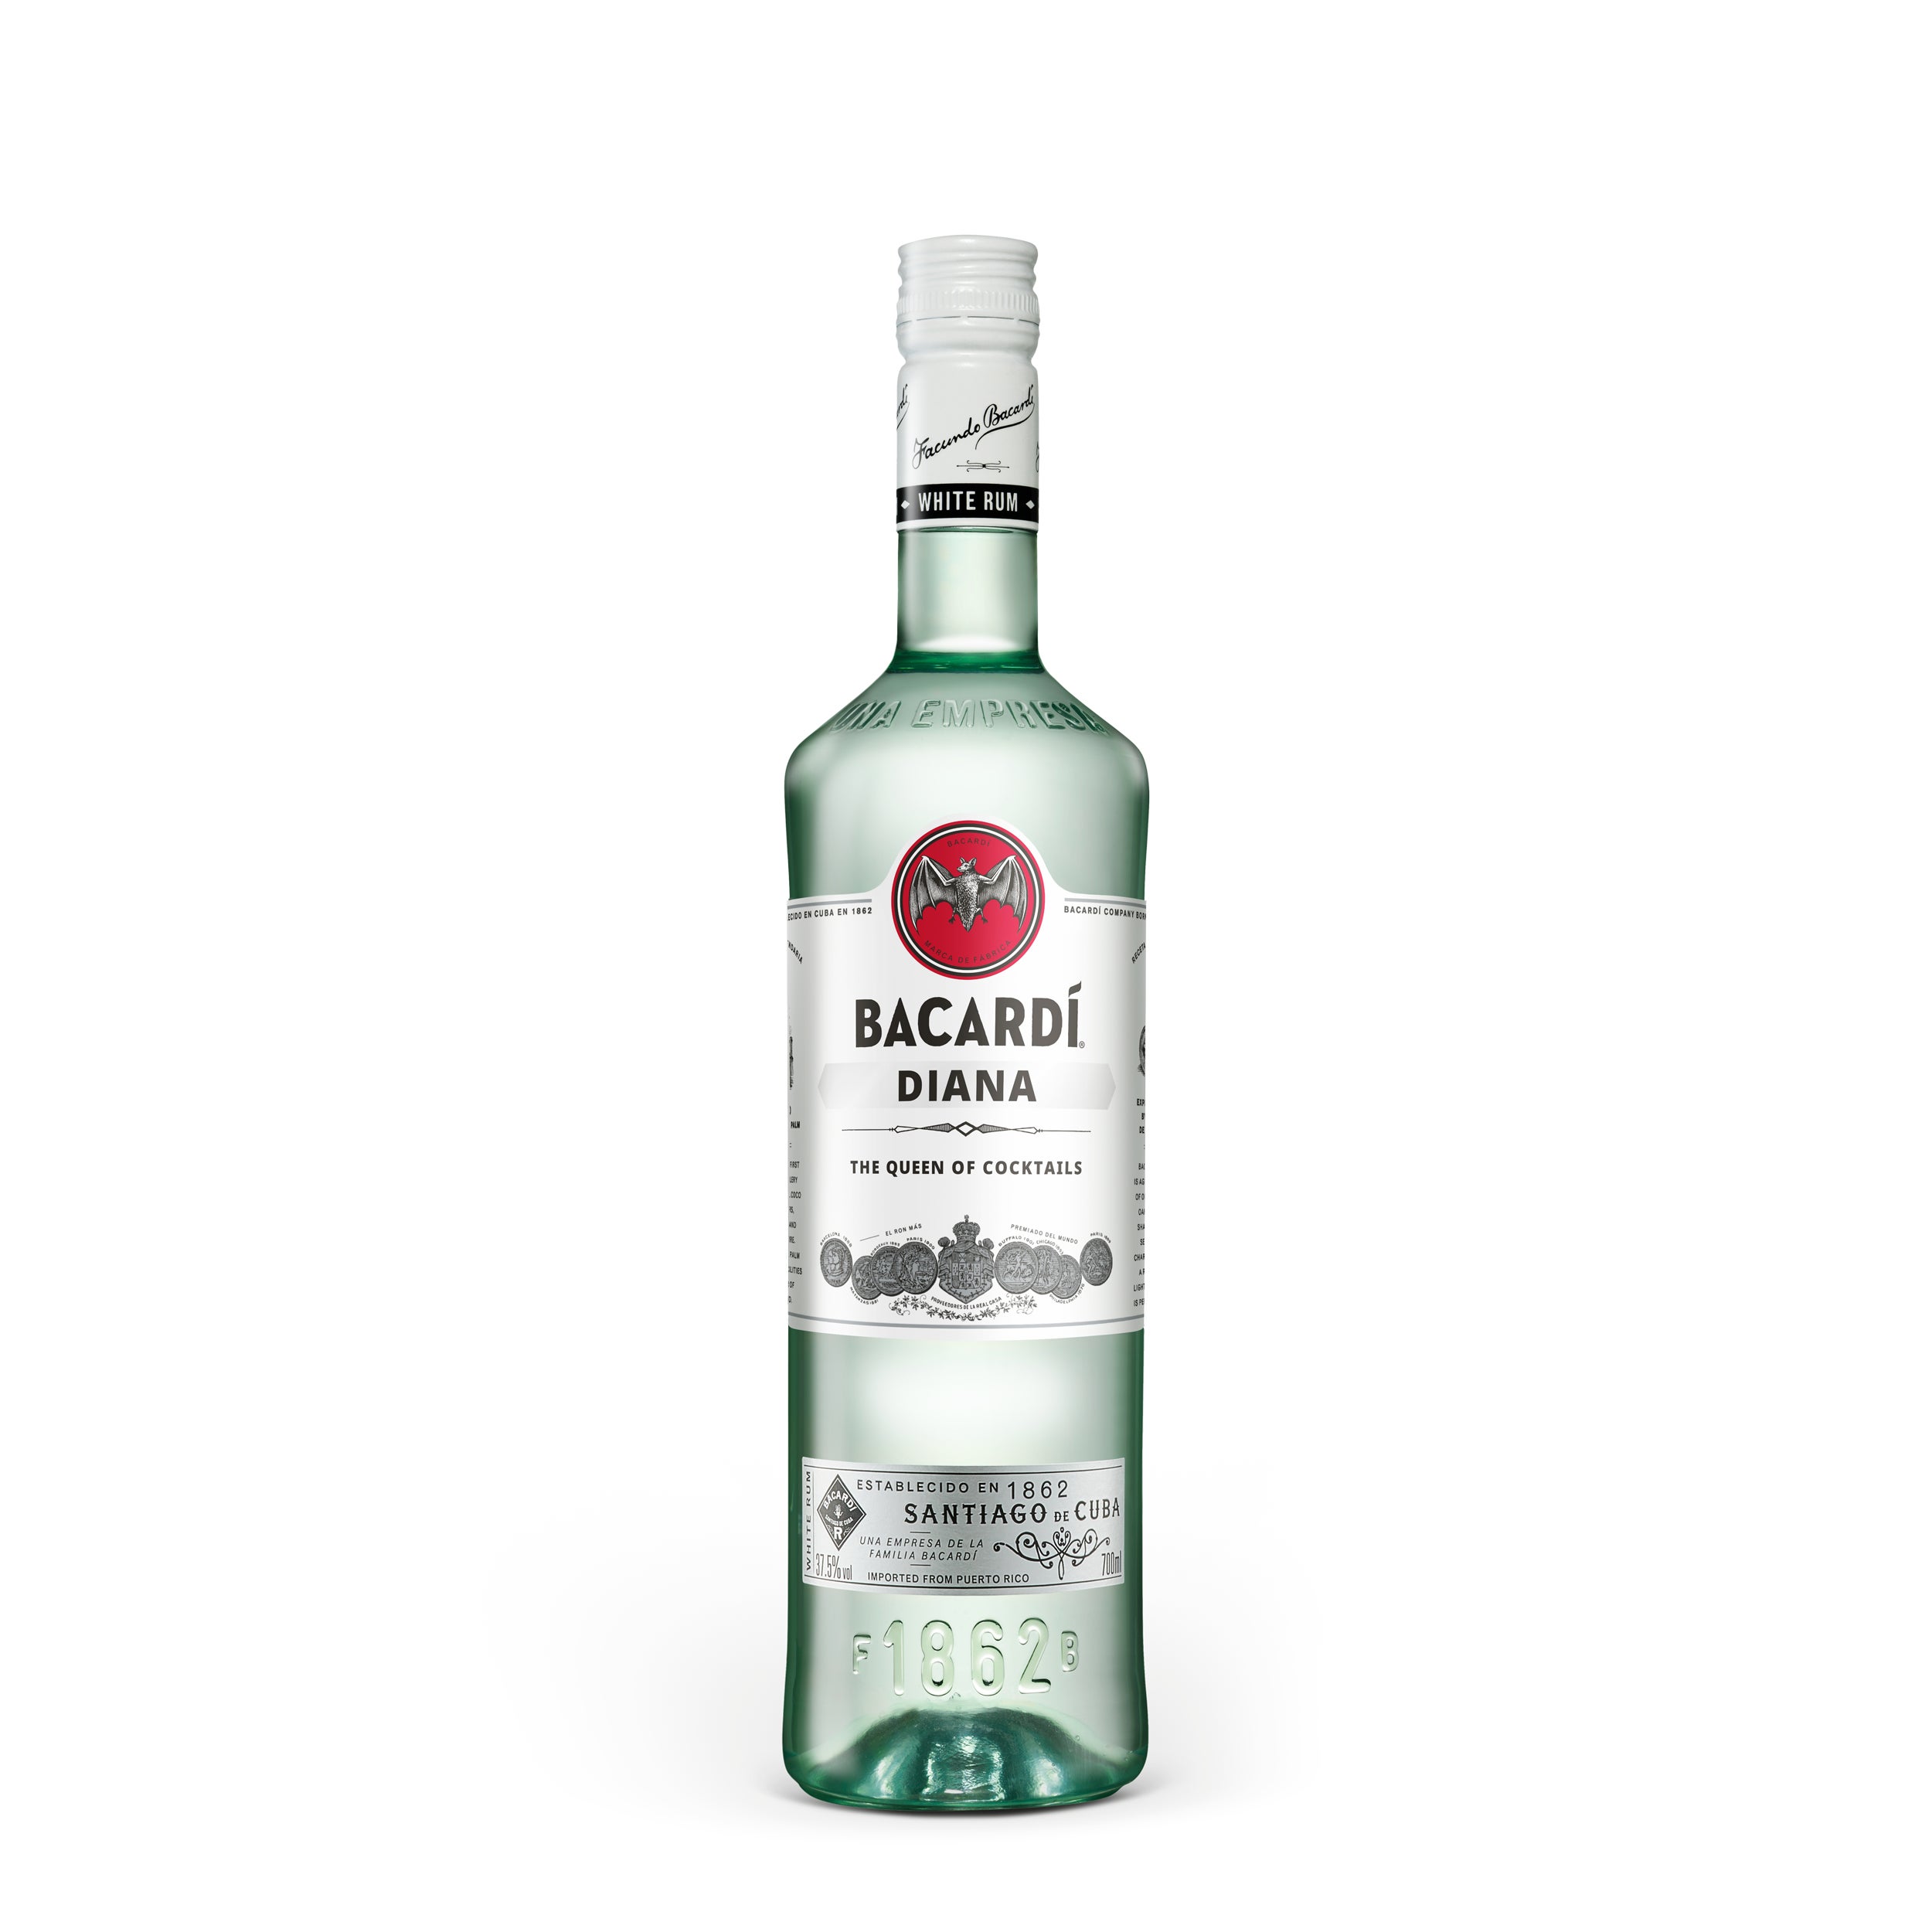 Personalised rum gift - Bacardi - White - 700 ml - Printed label